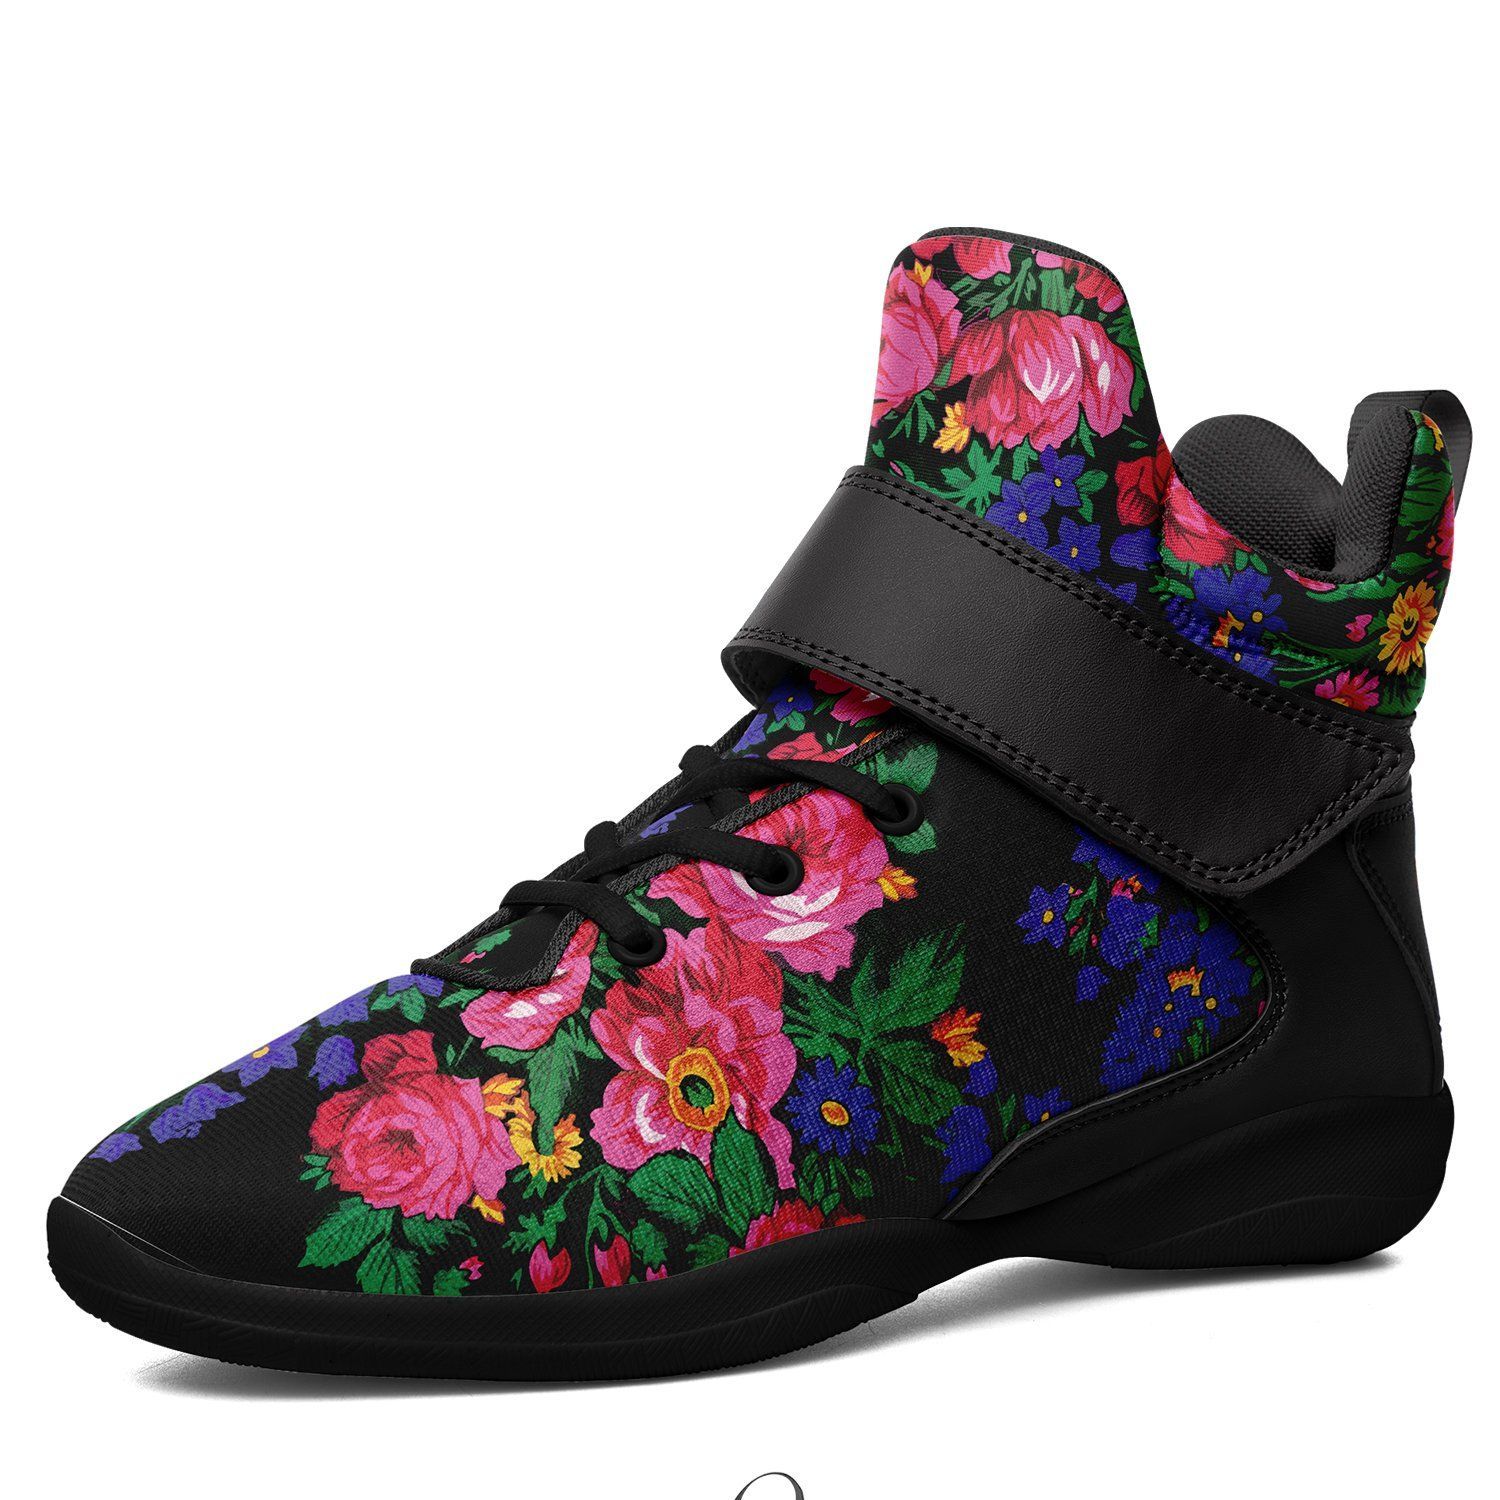 Kokum's Revenge Black Kid's Ipottaa Basketball / Sport High Top Shoes 49 Dzine US Child 12.5 / EUR 30 Black Sole with Black Strap 